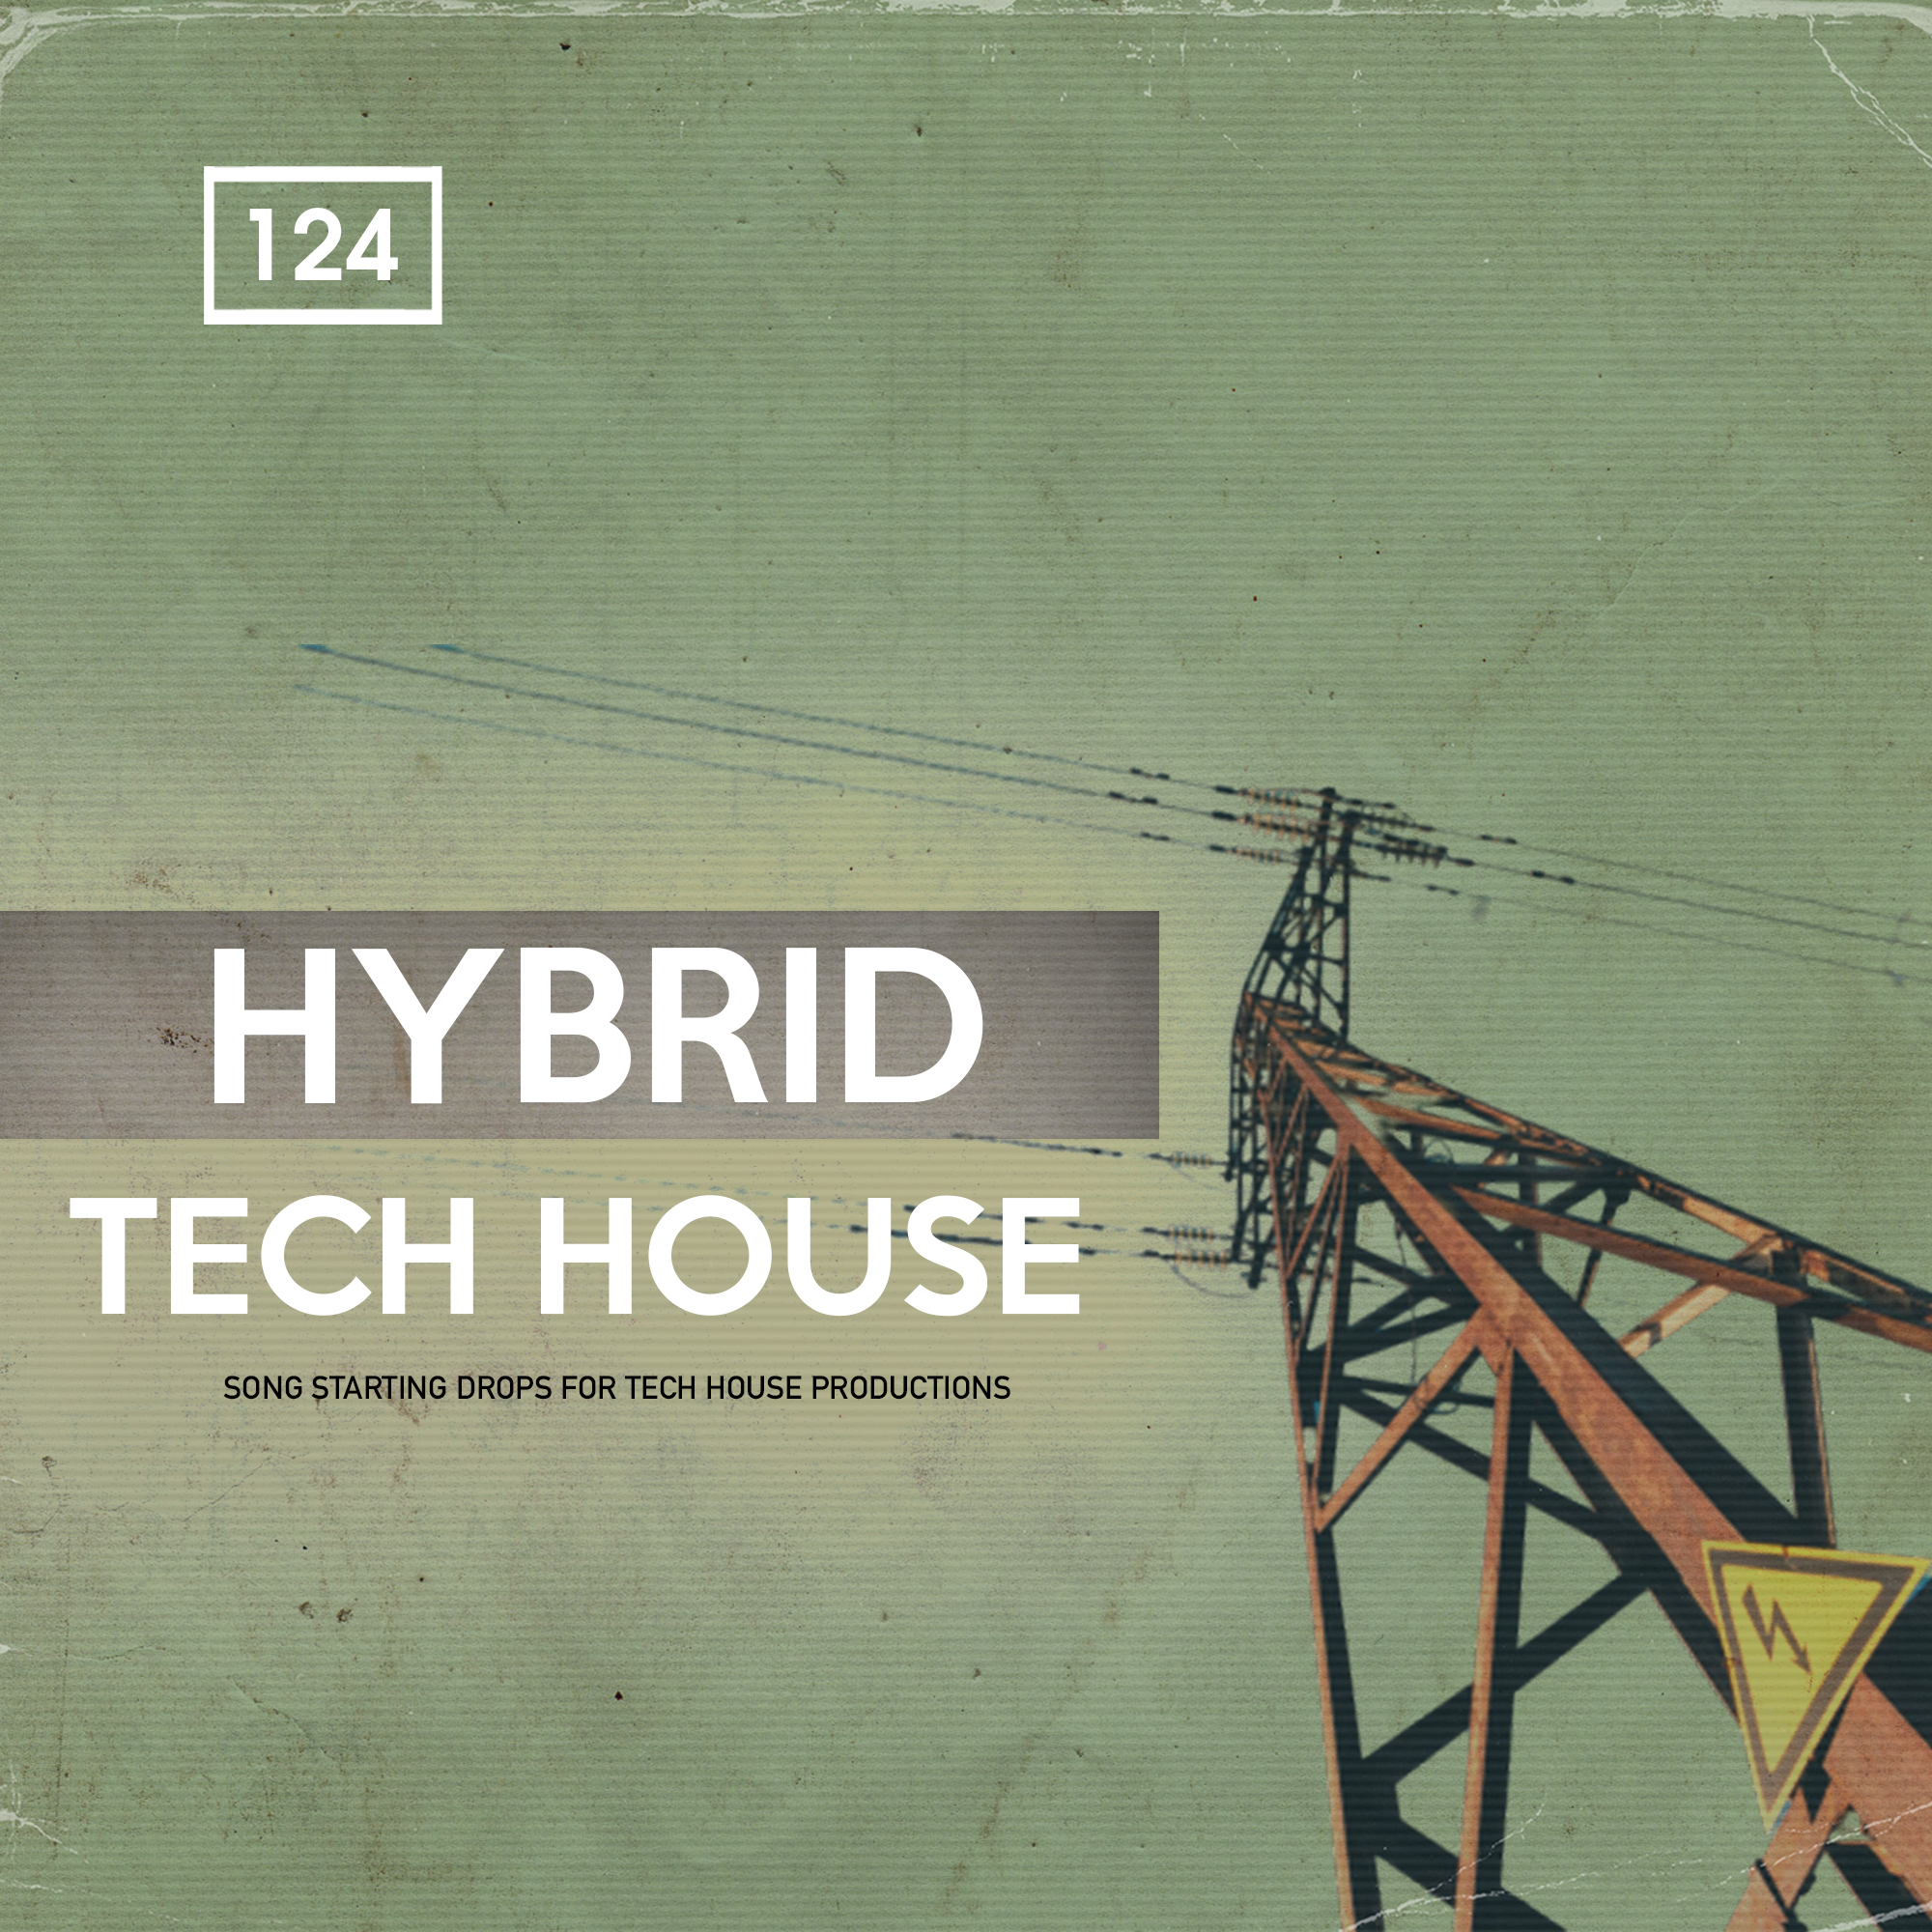 Bingoshakerz - Hybrid Tech House Drops